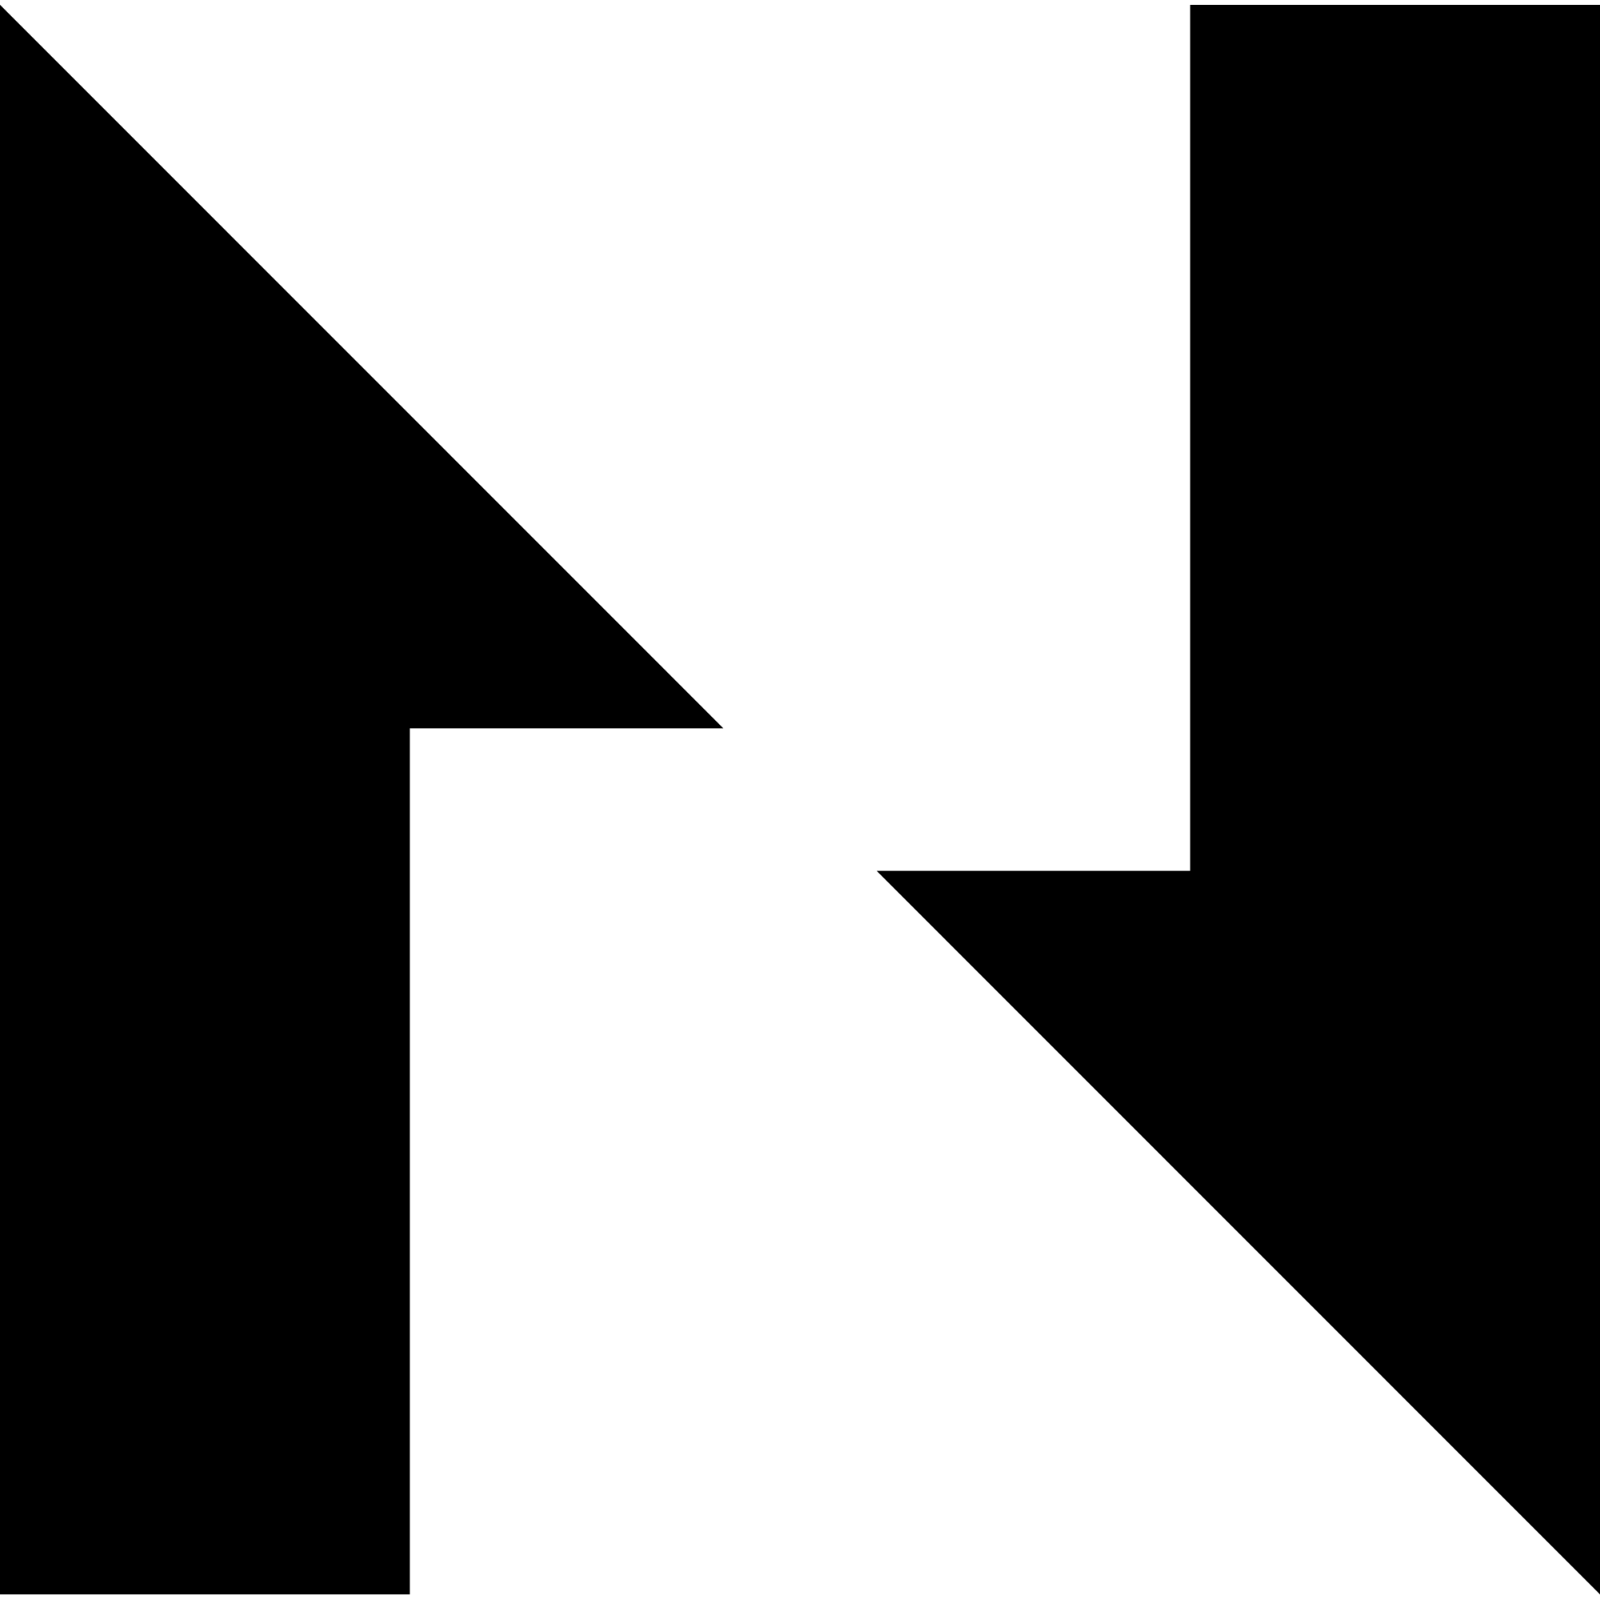 Nervos Network Logo